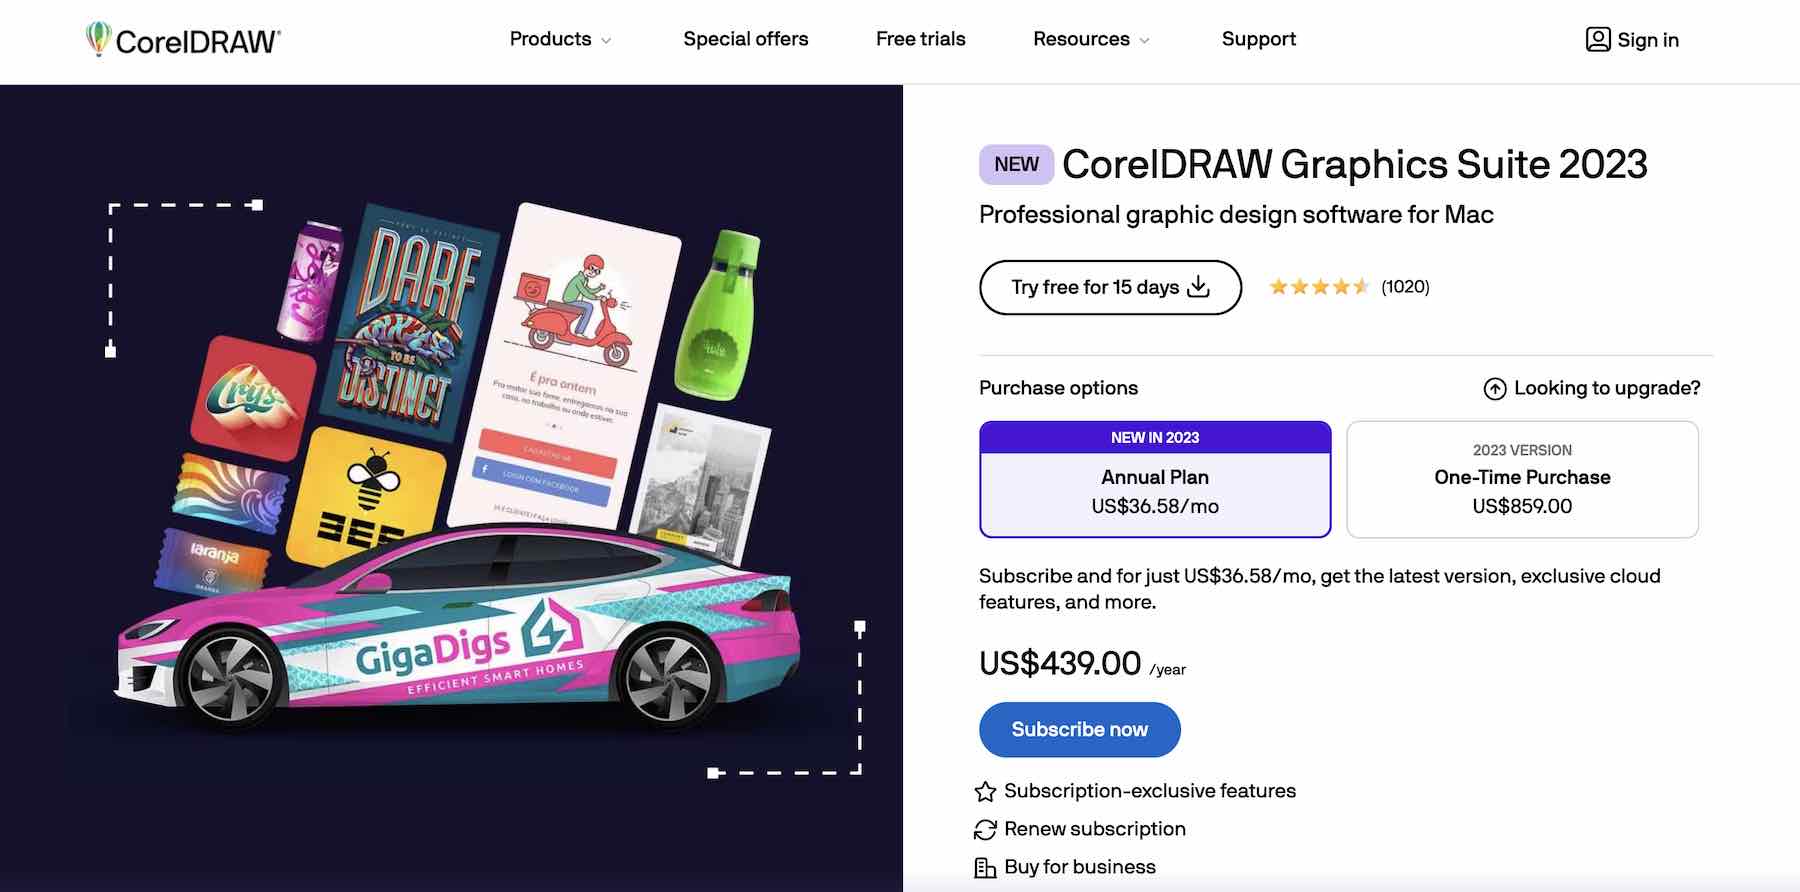 CorelDRAW website screenshot showing pricing plans